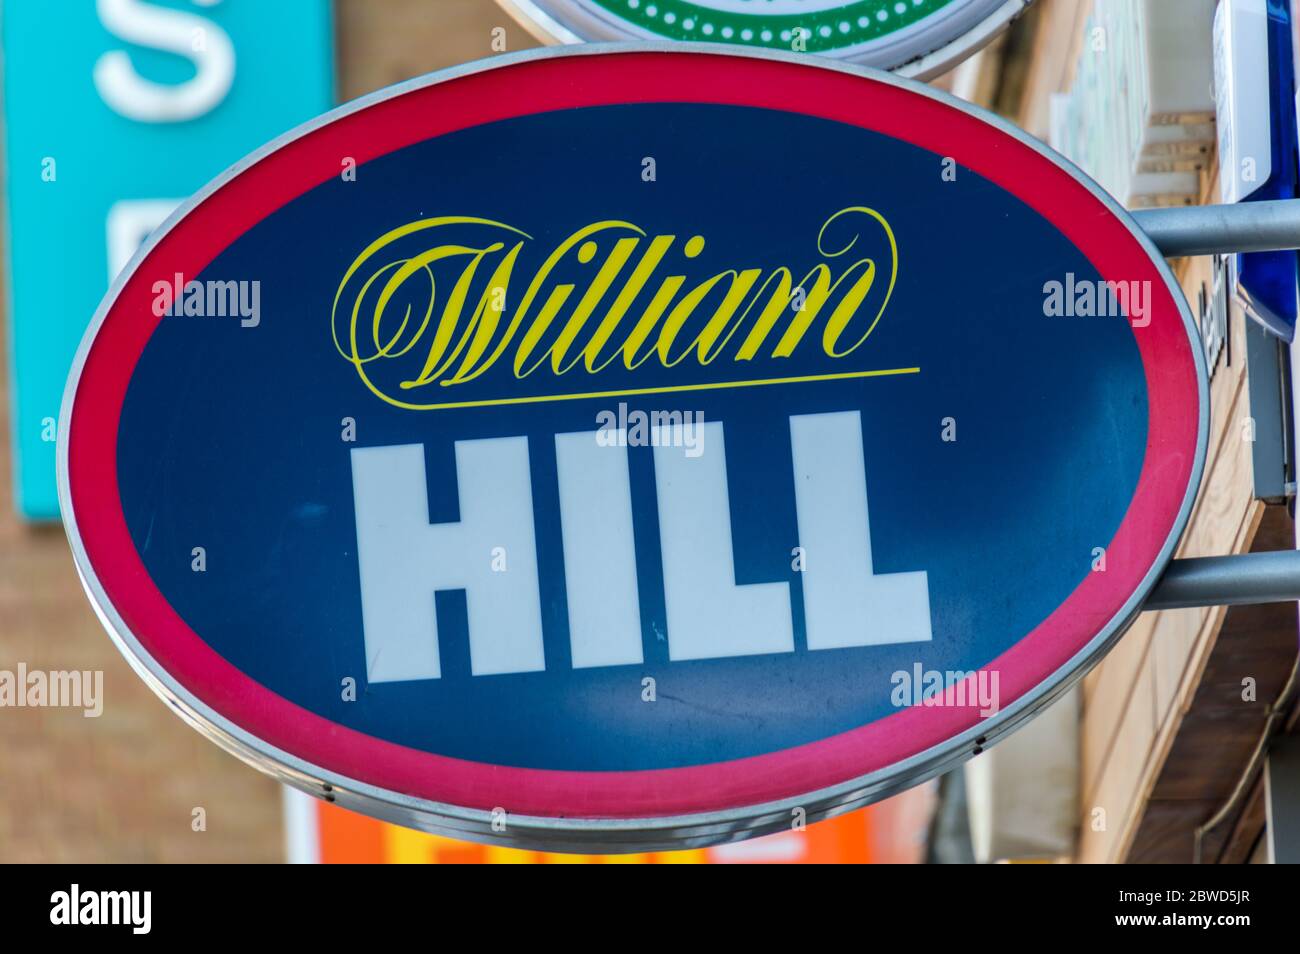 William Hill gambling shop name board Stock Photo